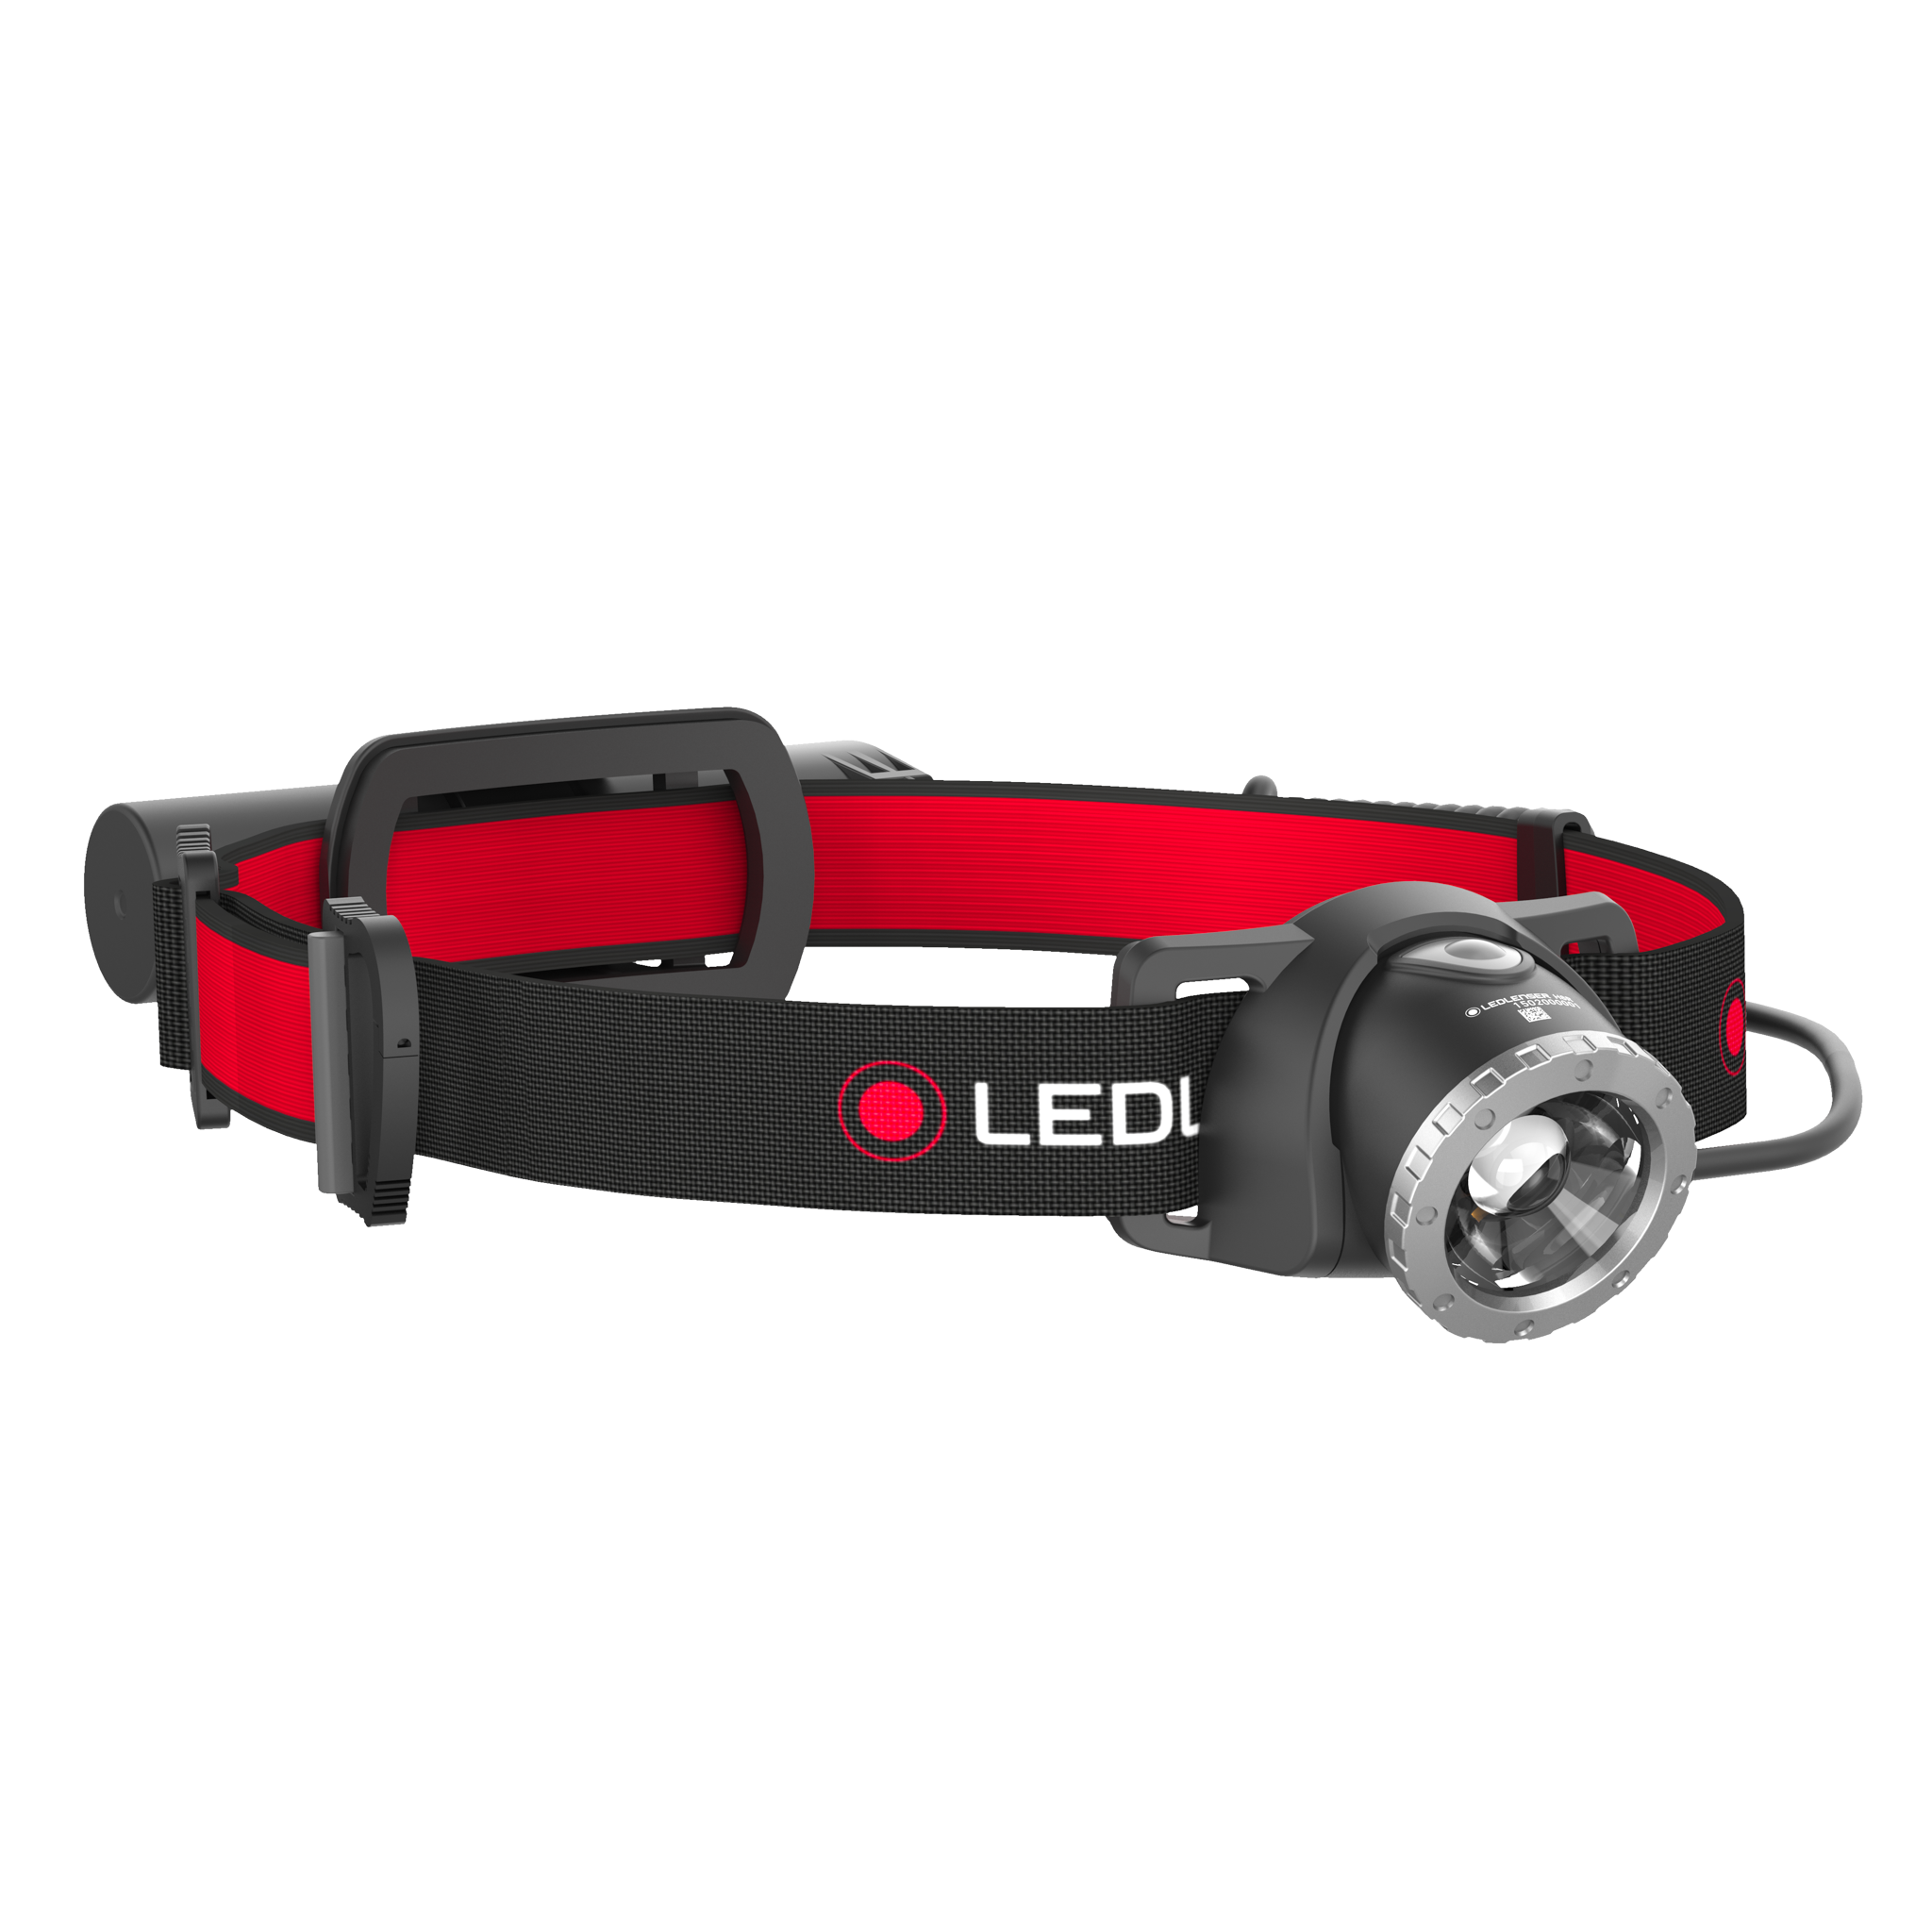 Ledlenser H8R High Power LED Rechargeable HEADLAMP, 600 Lumens - Black